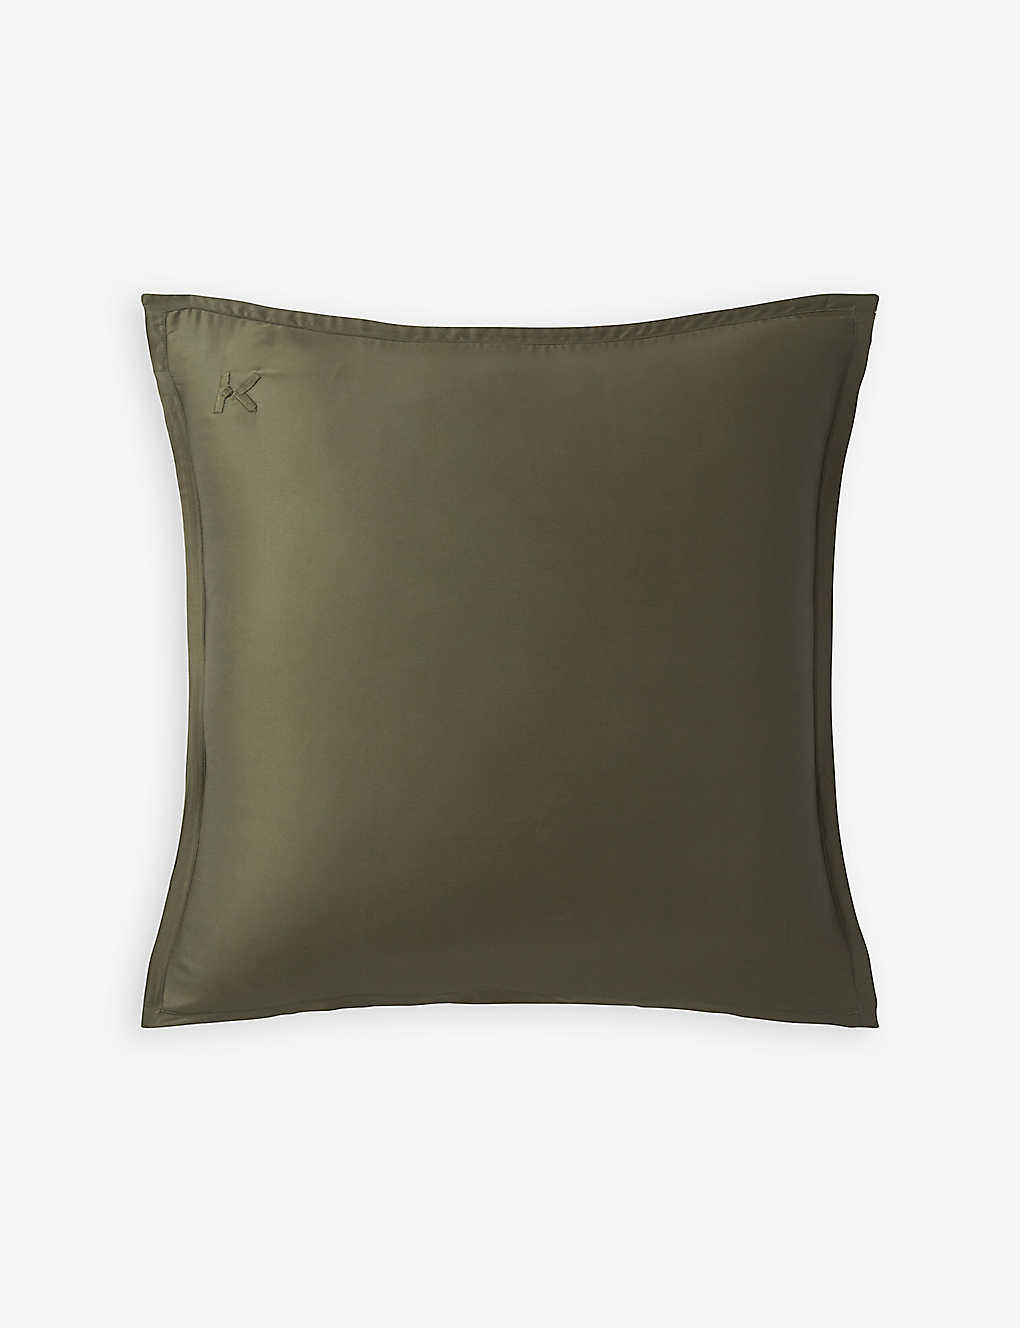 Kenzo Safari Iconic Square Cotton Pillowcase 65cm X 65cm